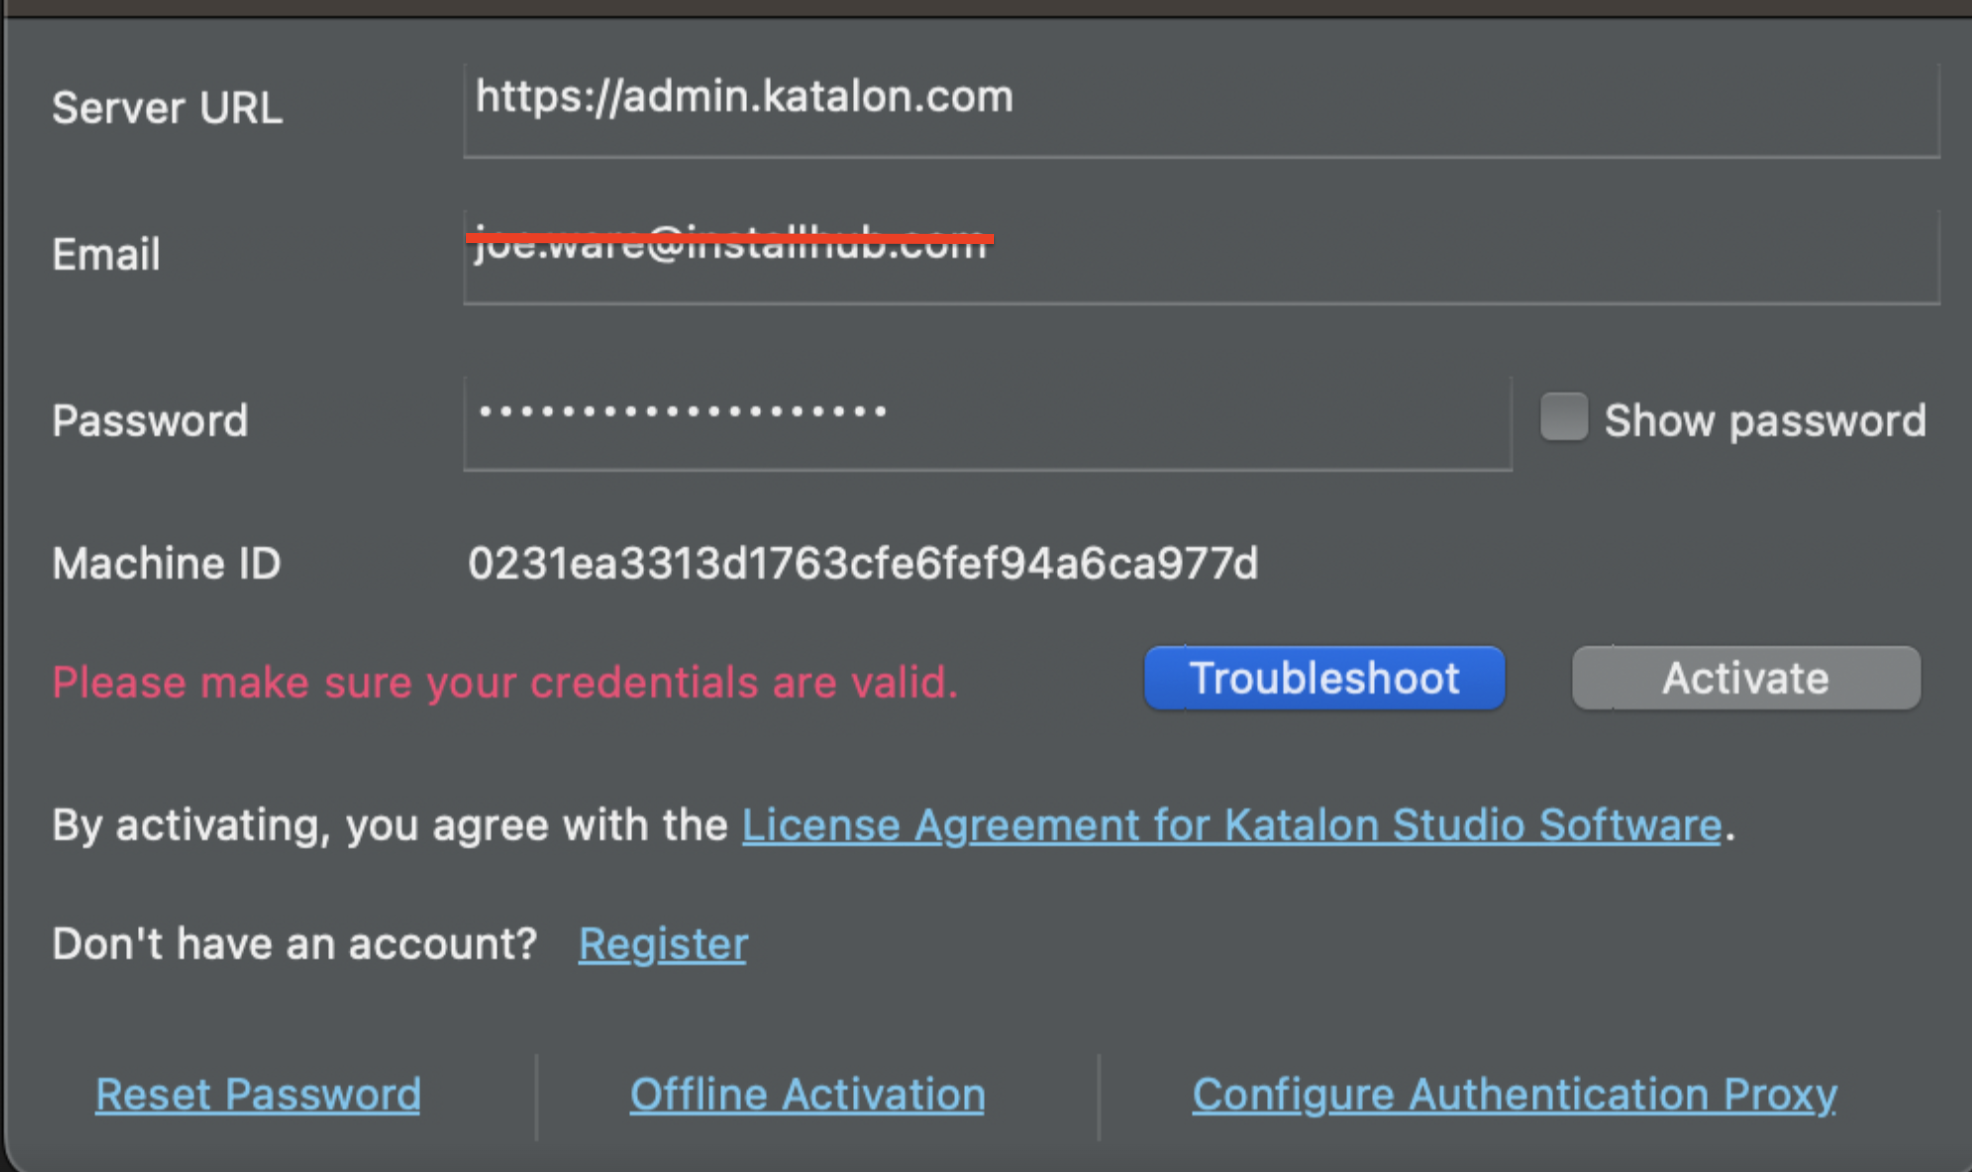 Please make sure your credentials are valid message when activating Katalon Studio Enterprise (KSE).